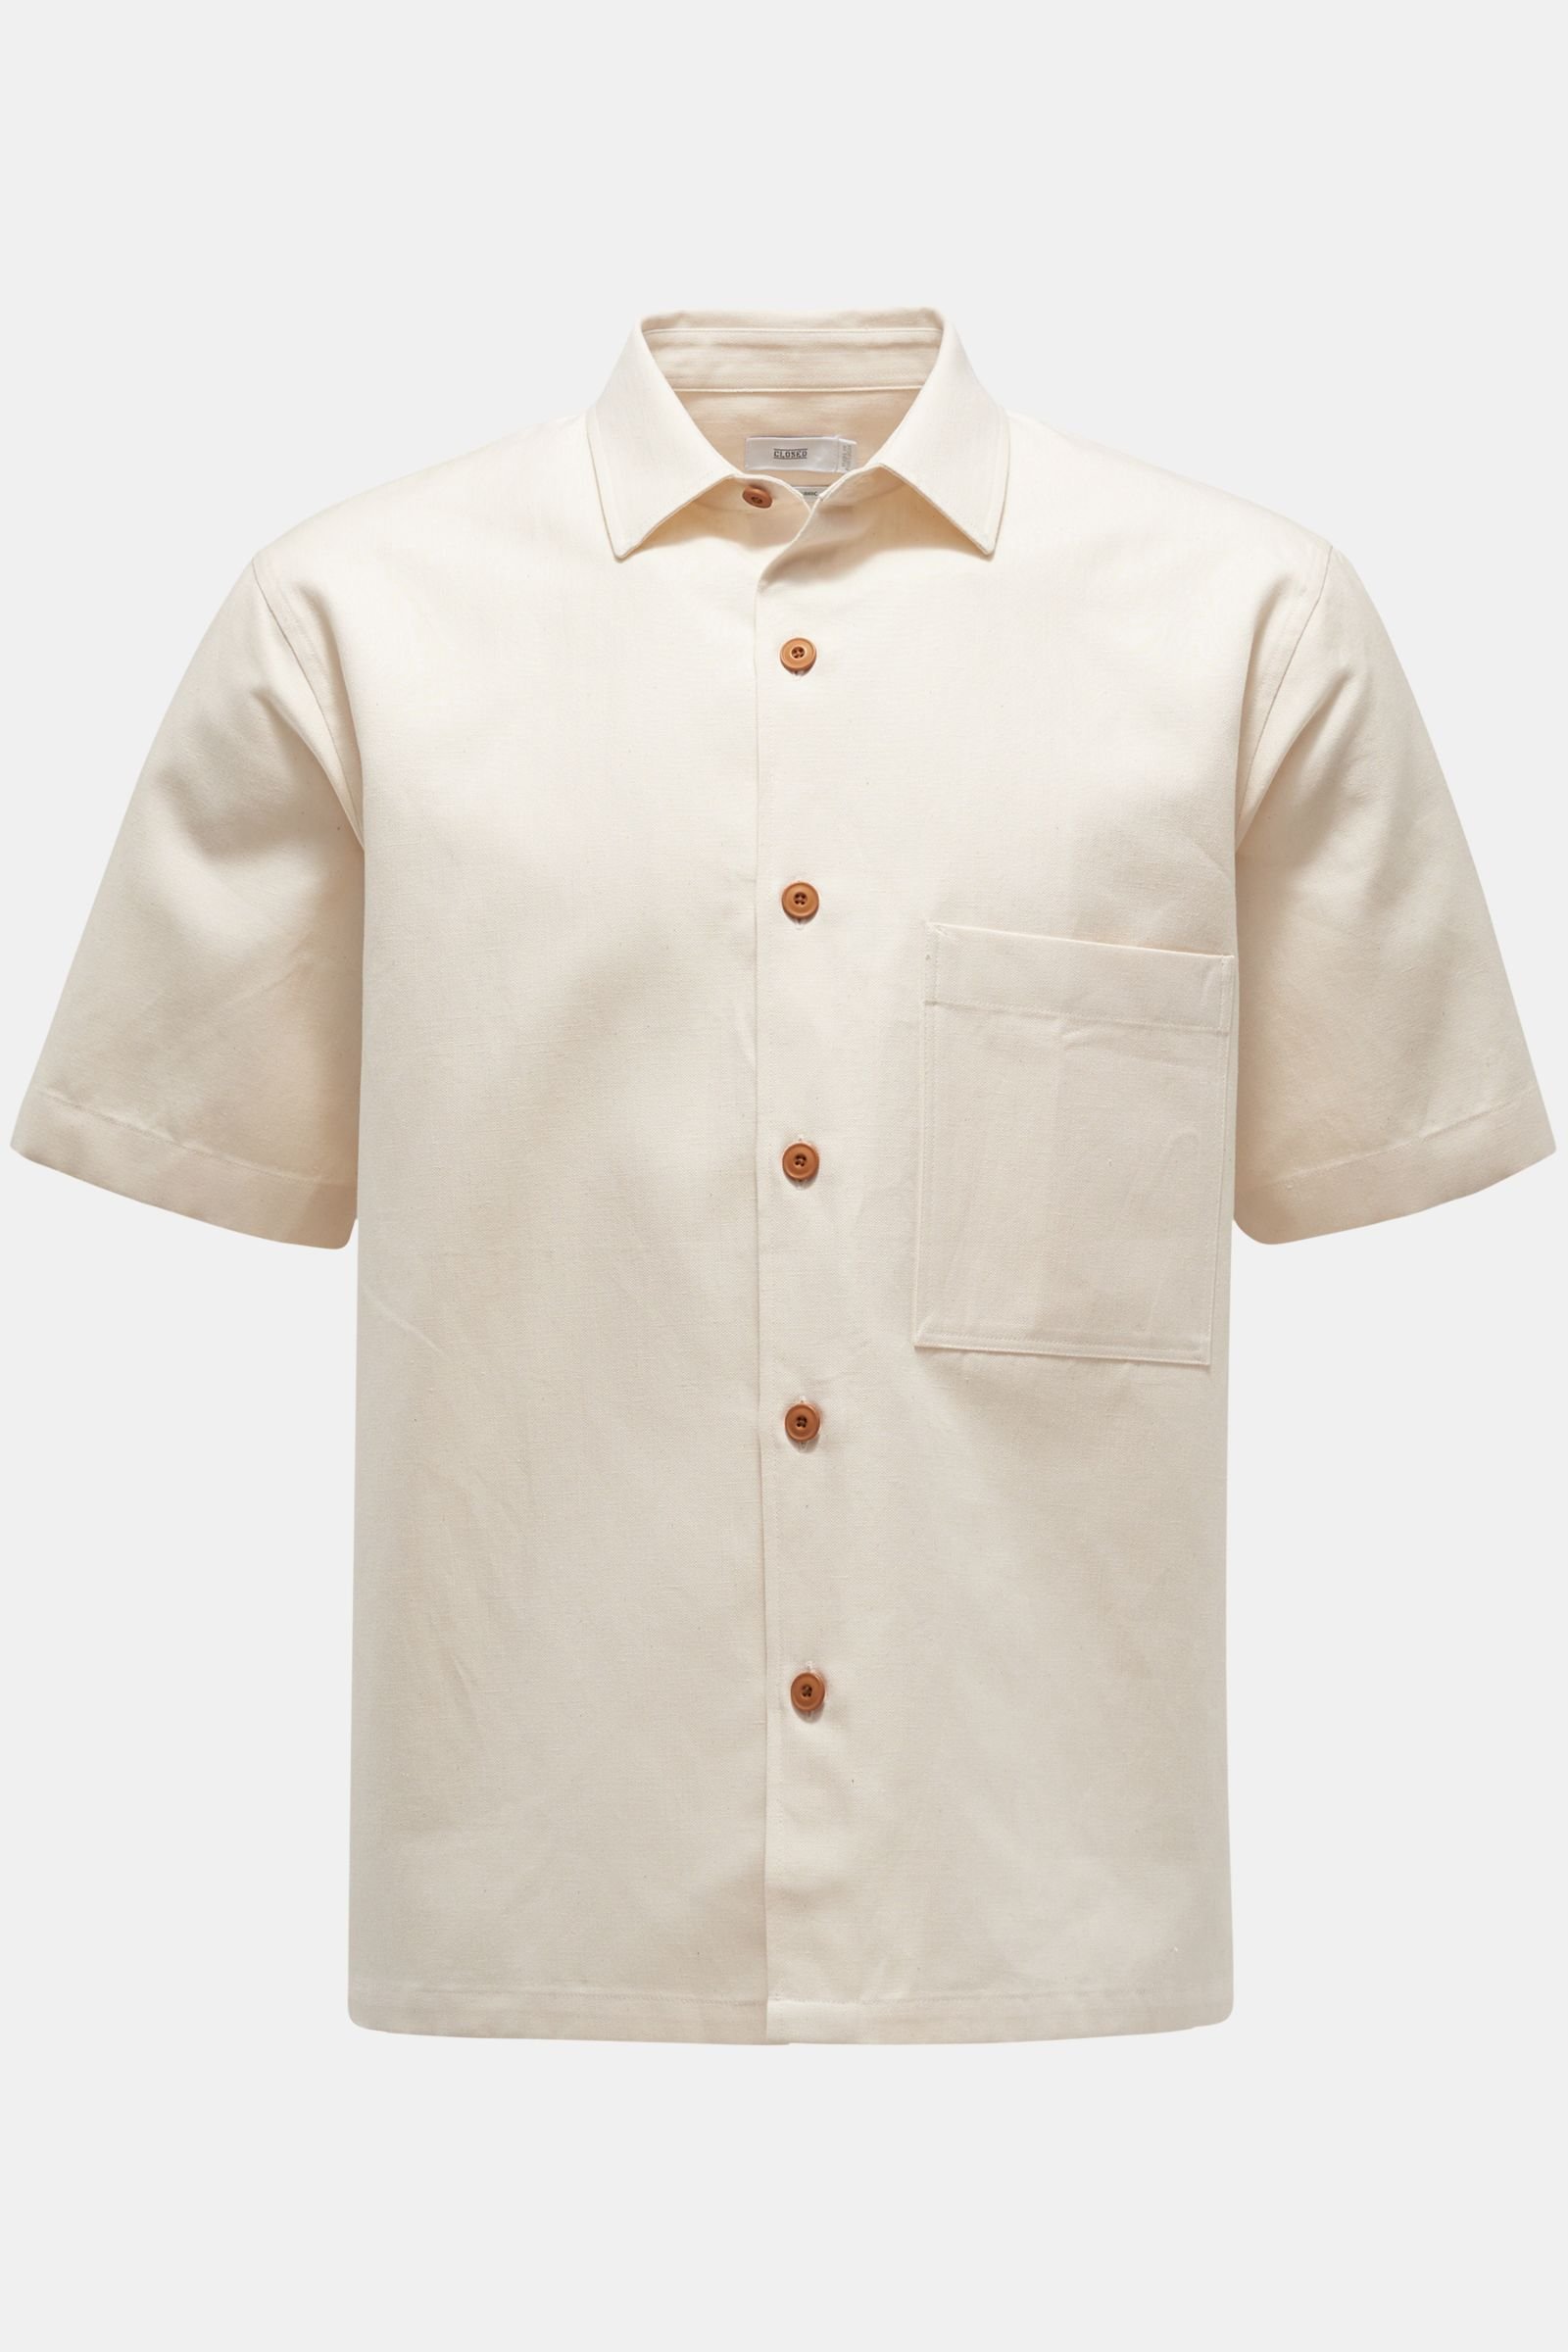 Oxford short sleeve shirt cream